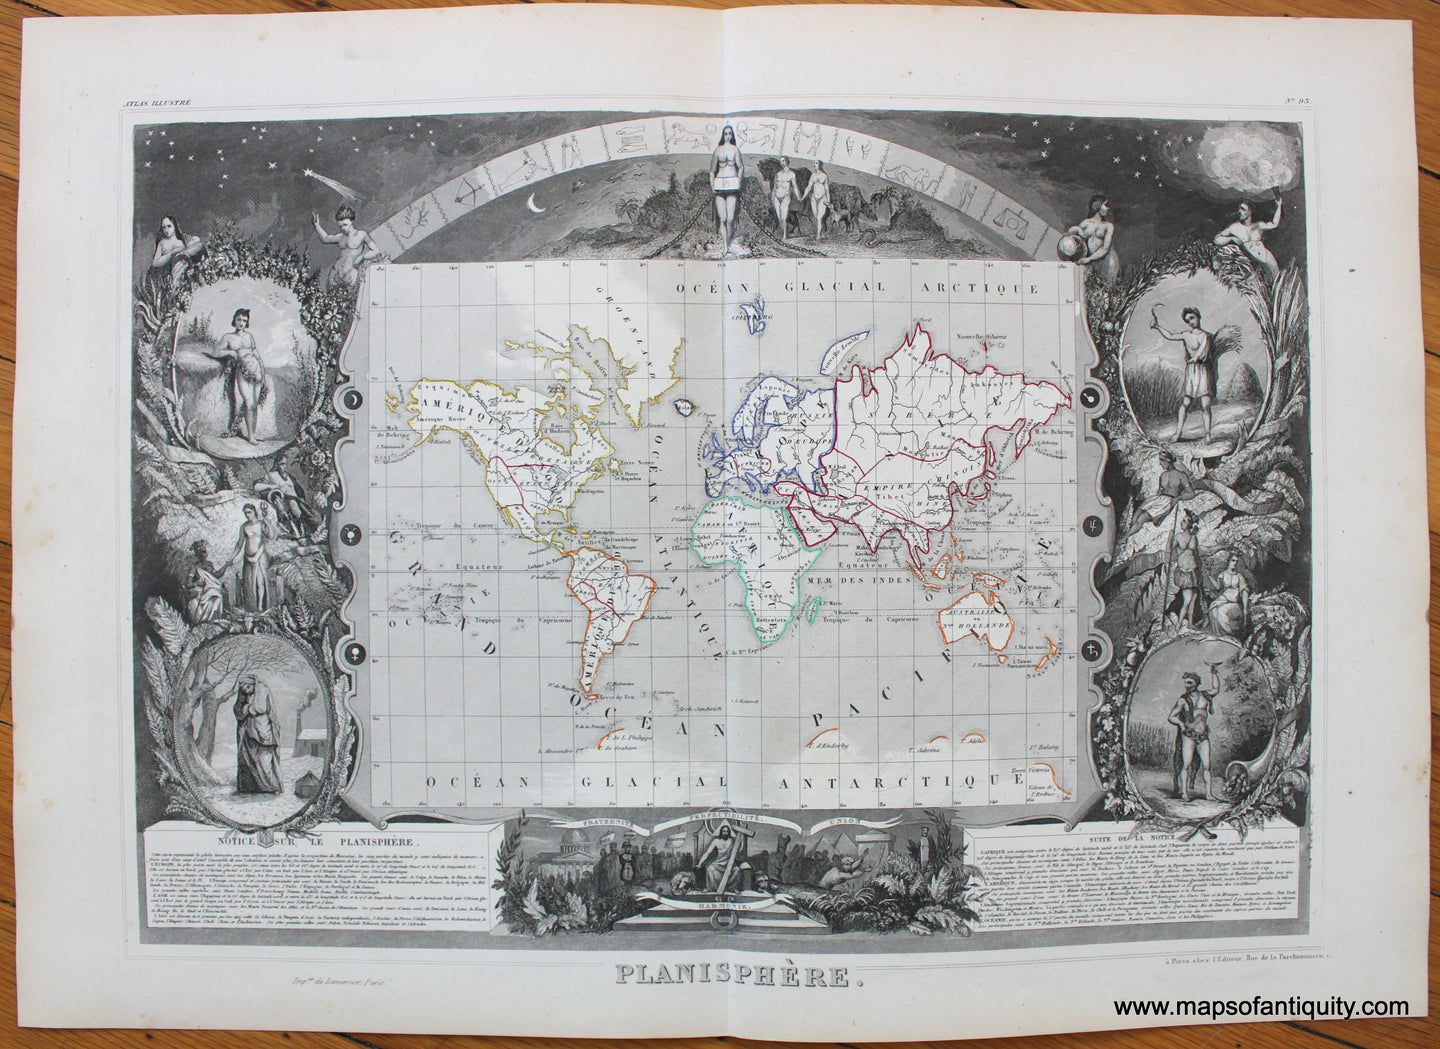 Antique-Map-Planisphere-Levasseur-1851-vignettes-world-mercator-projection-1850s-1800s-19th-century-maps-of-antiquity